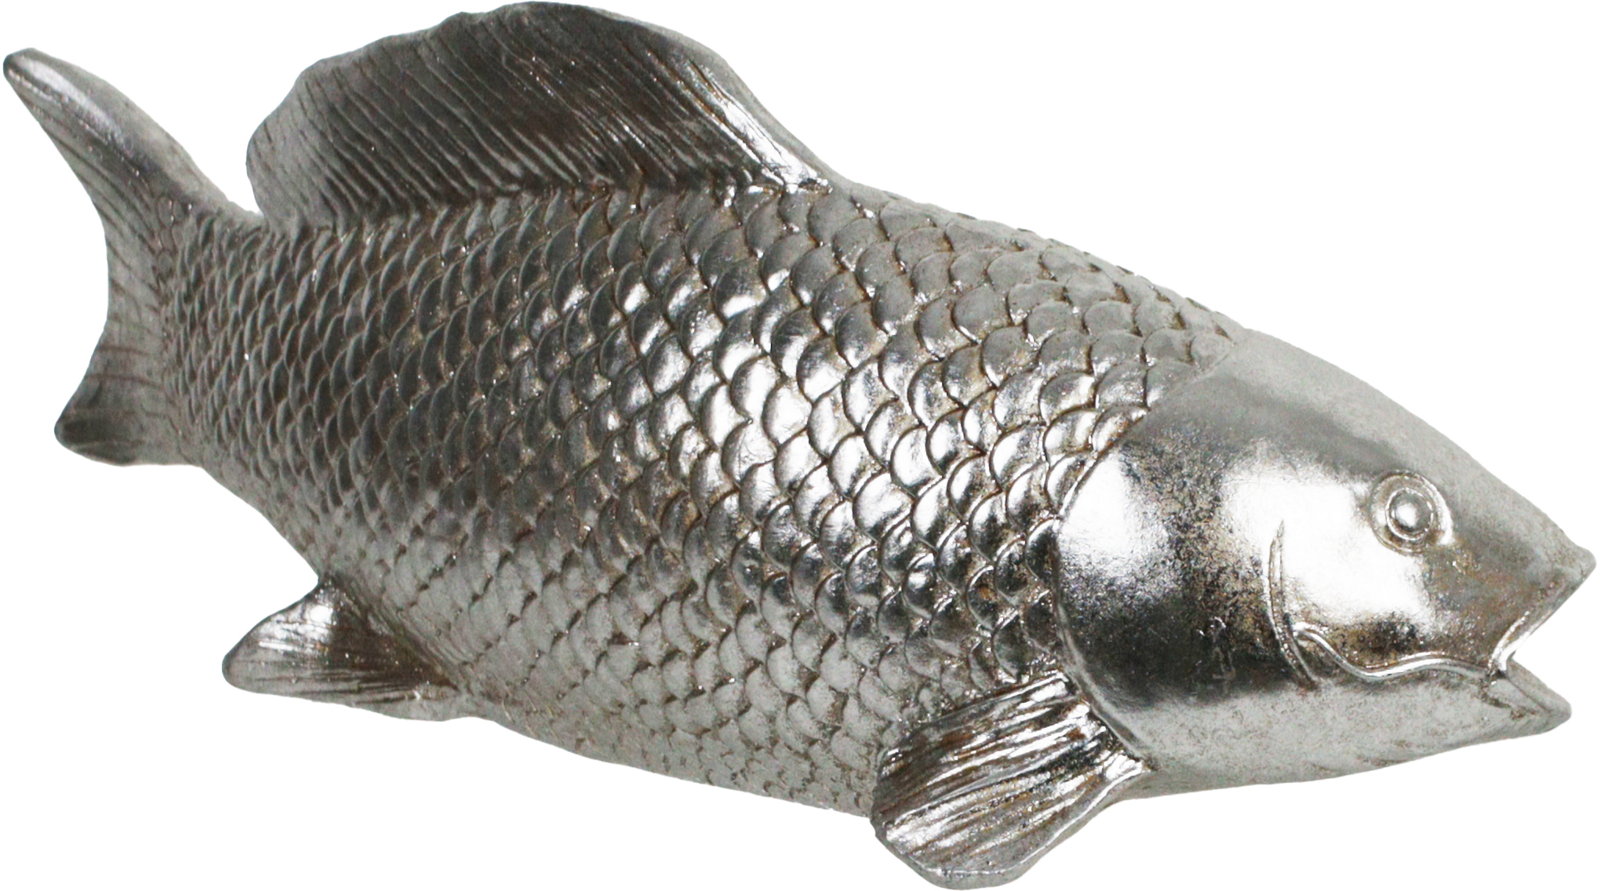 Ornament Fish Polyresin Silver 30.5x